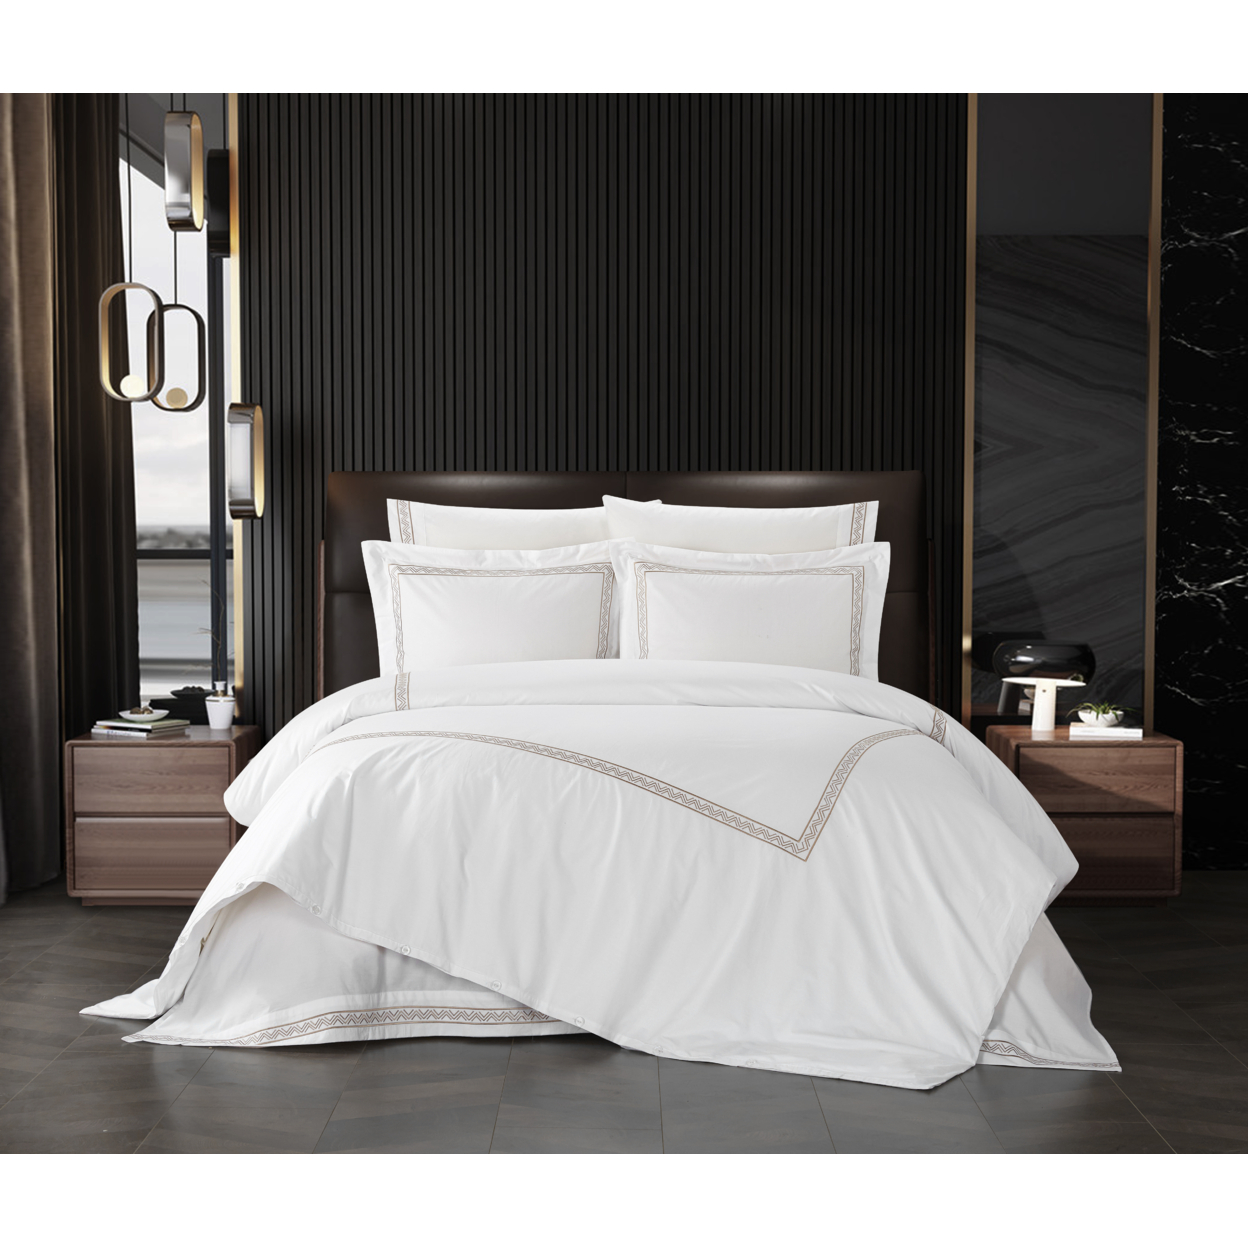 Ella 3 Piece Duvet Cotton Cover Set Hotel Collection Bedding - Grey, King